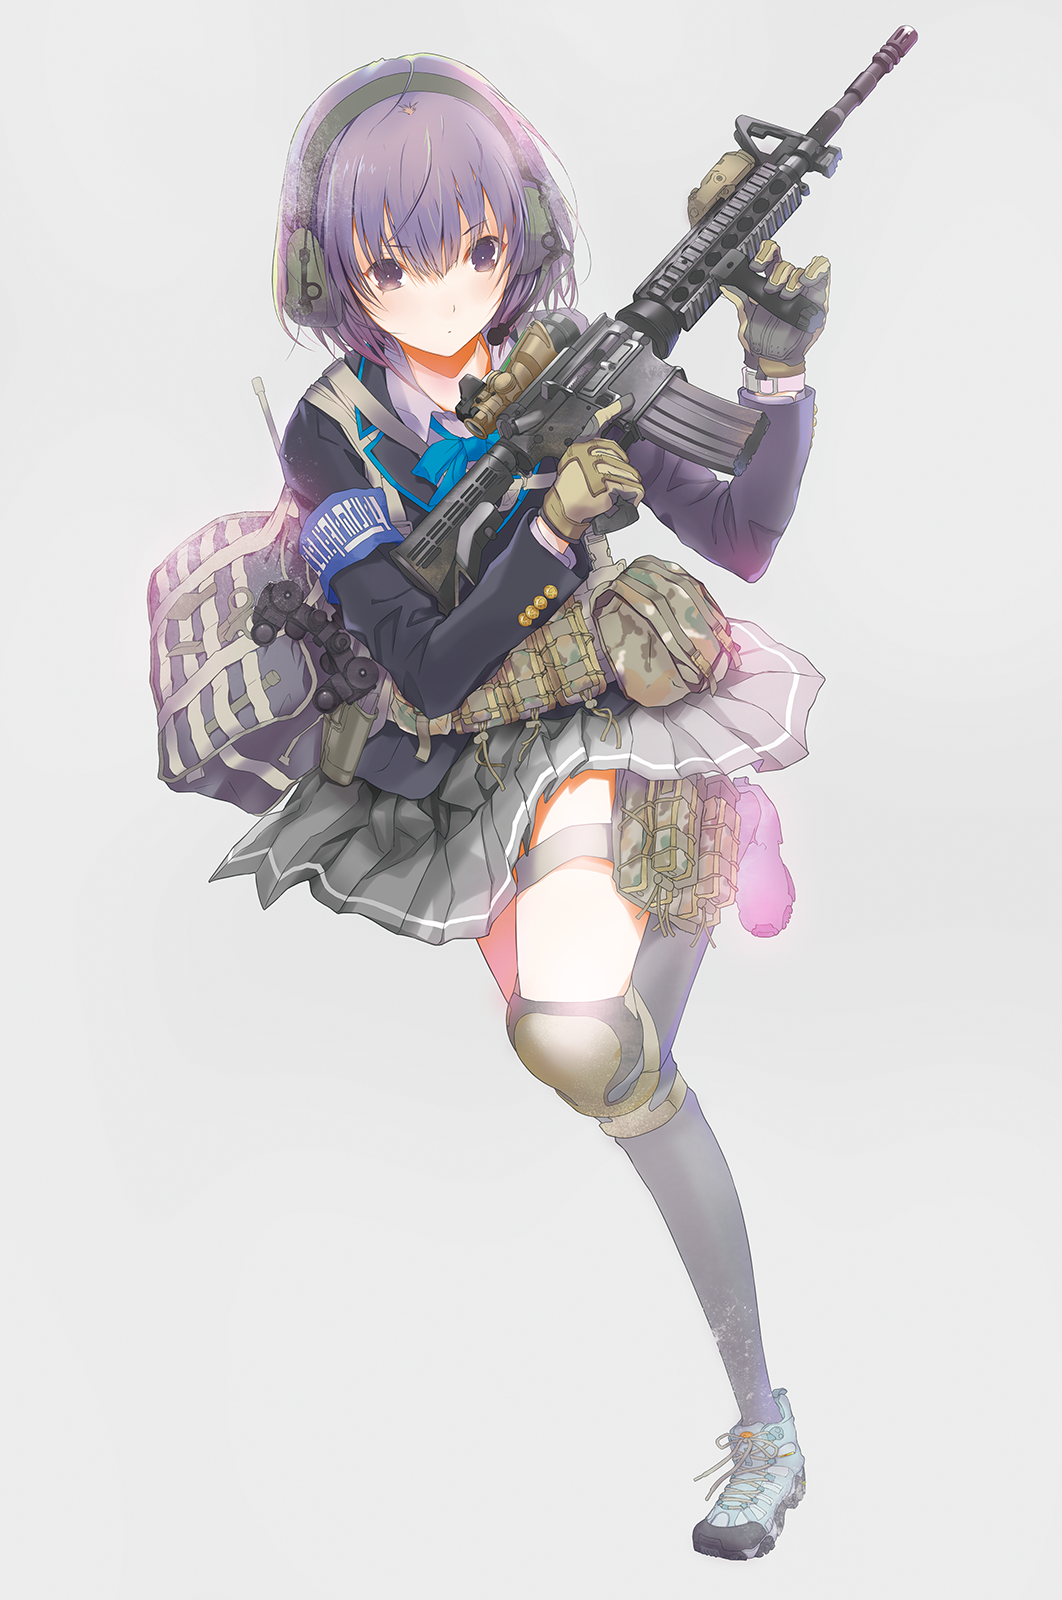 Anime Anime Girls Short Hair Weapon Gun M4 ACOG Vertical Grip Fuyuno Haruaki 1062x1600